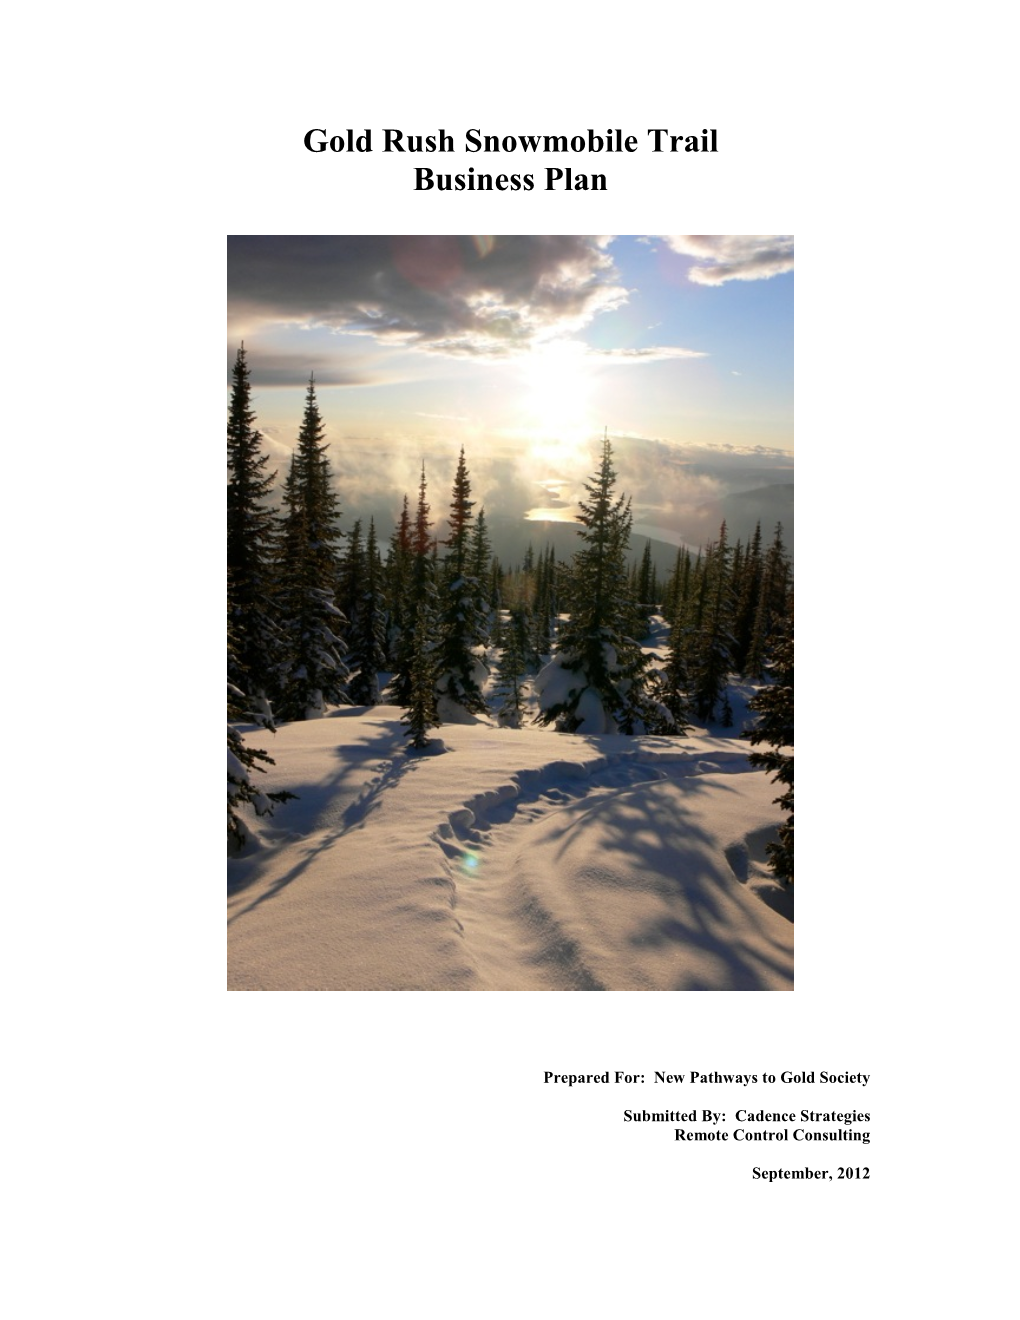 Gold Rush Snowmobile Trail Business Plan